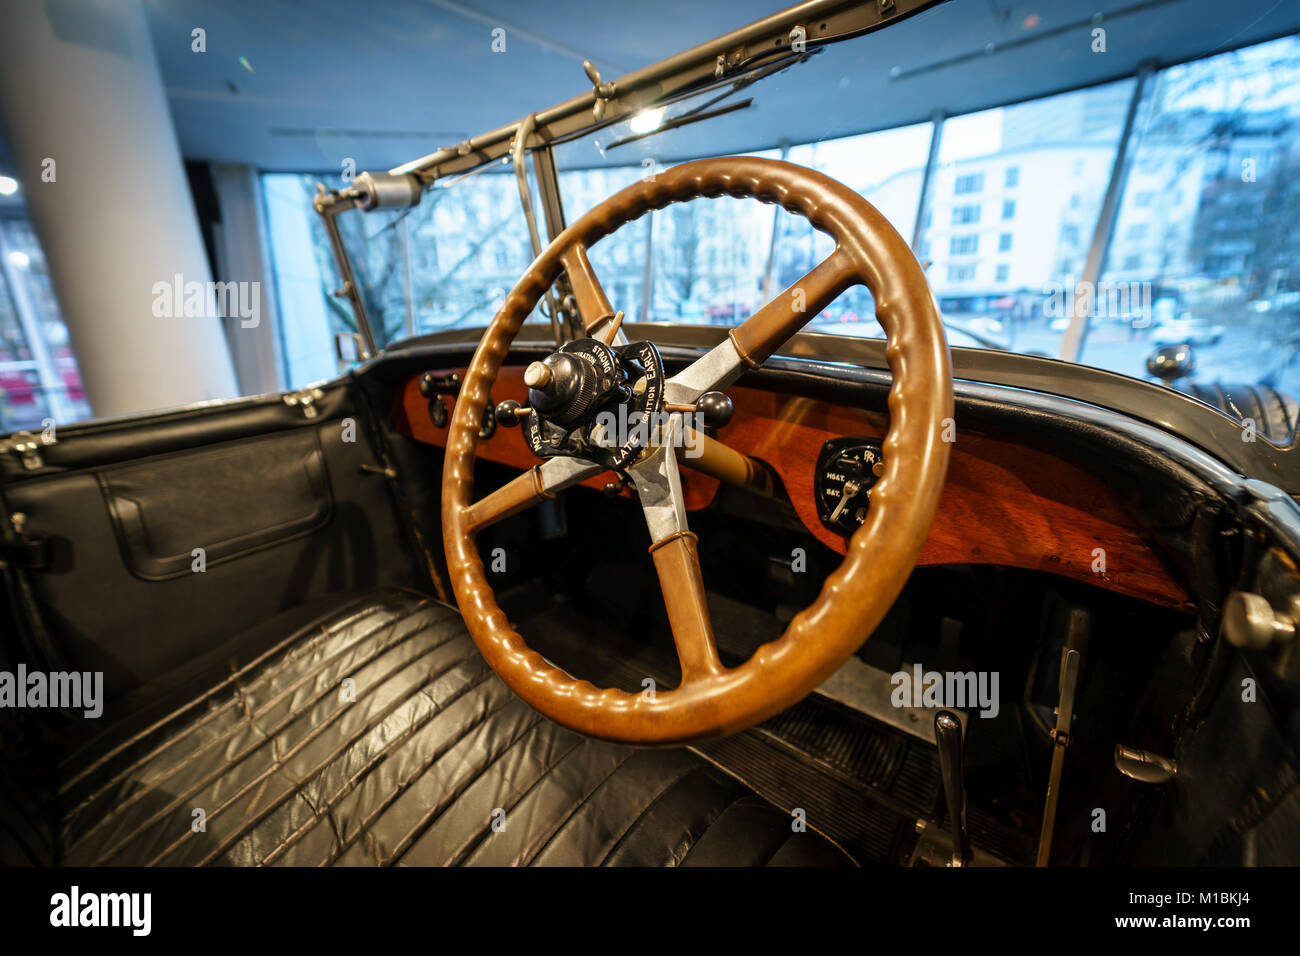 berlin december 21 2017 showroom interior of luxury car stock photo alamy